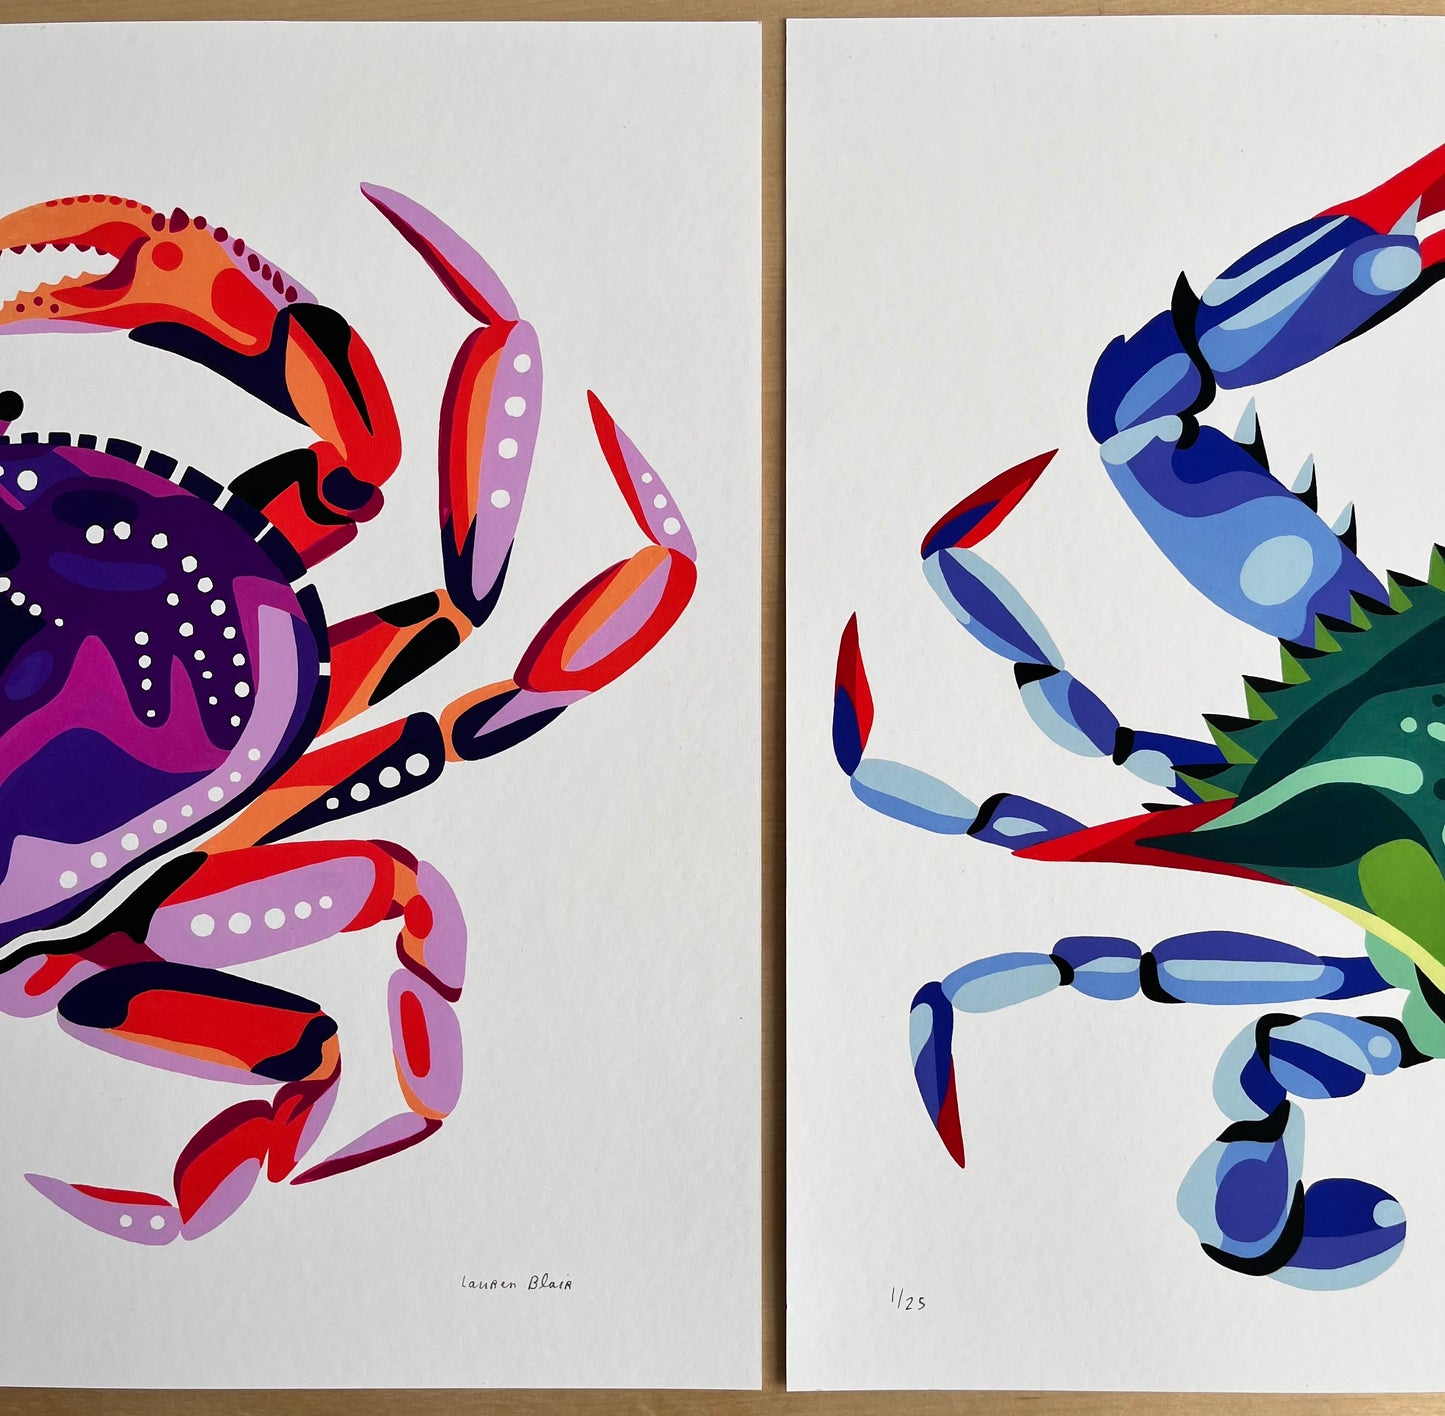 Dungeness Crab - Limited Edition Giclée Art Print